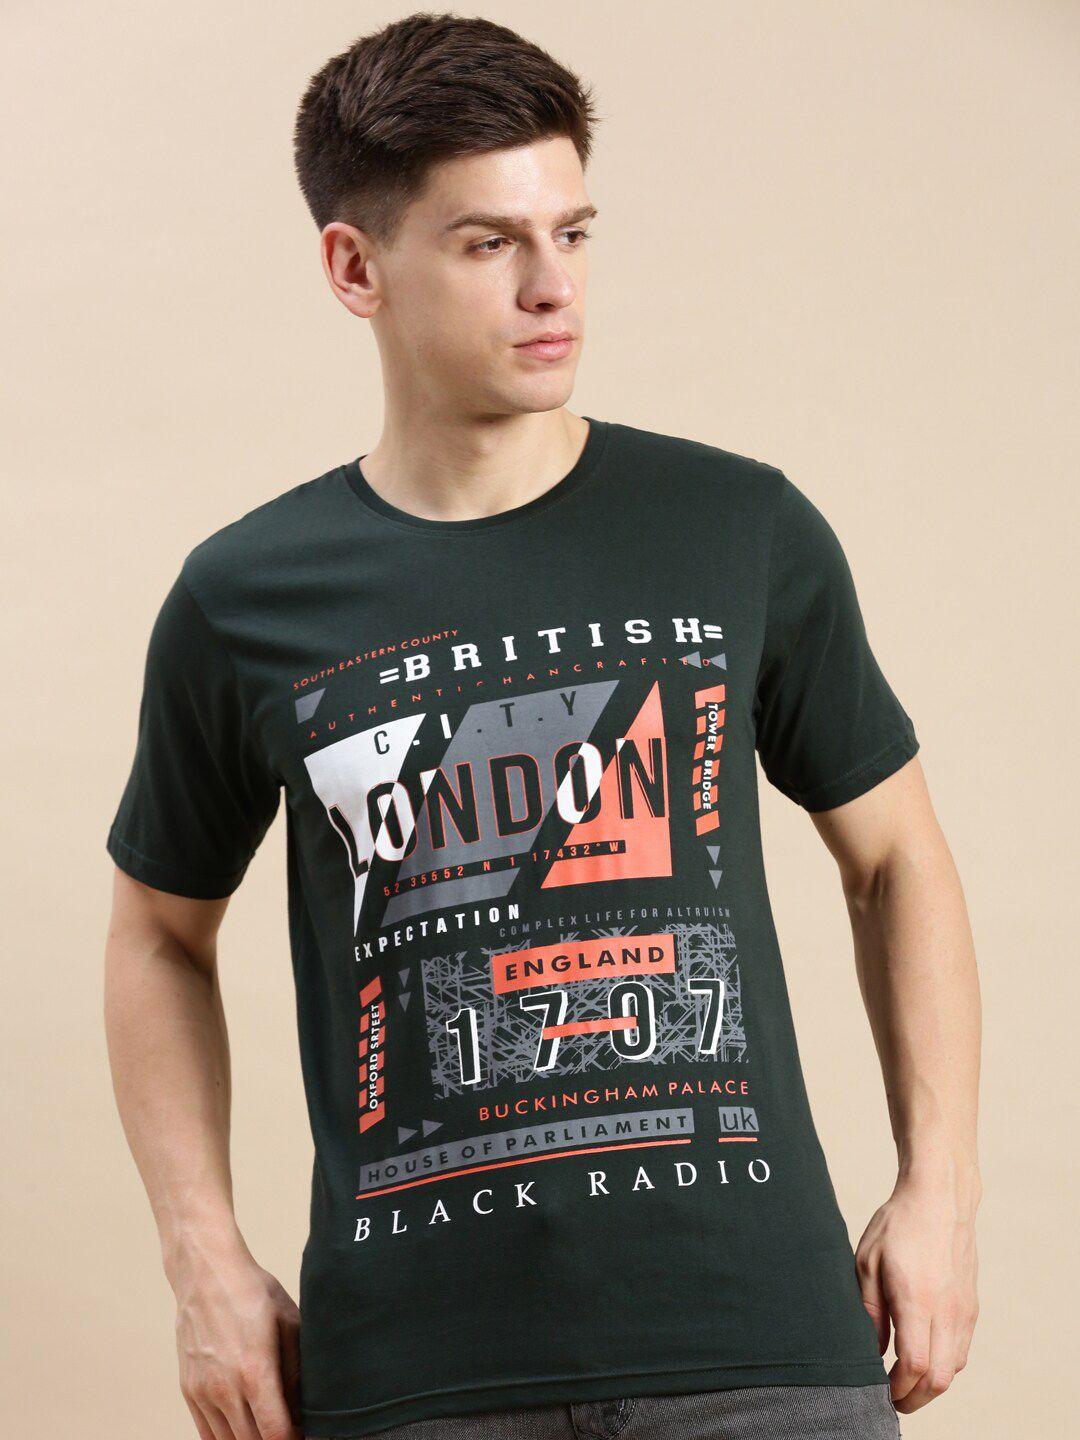 BLACK RADIO Typography Printed Round Neck Cotton T-Shirt